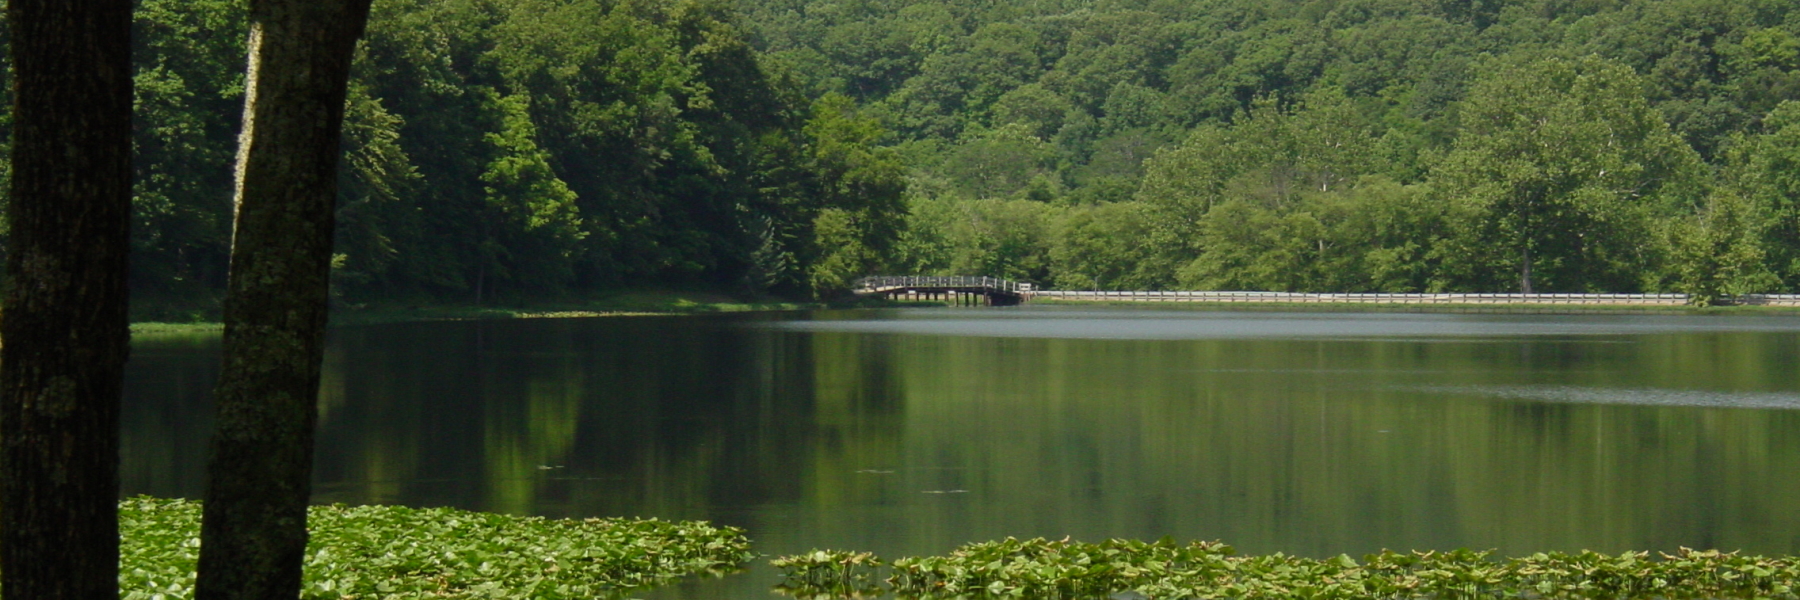 Lake View of Distant Bridge